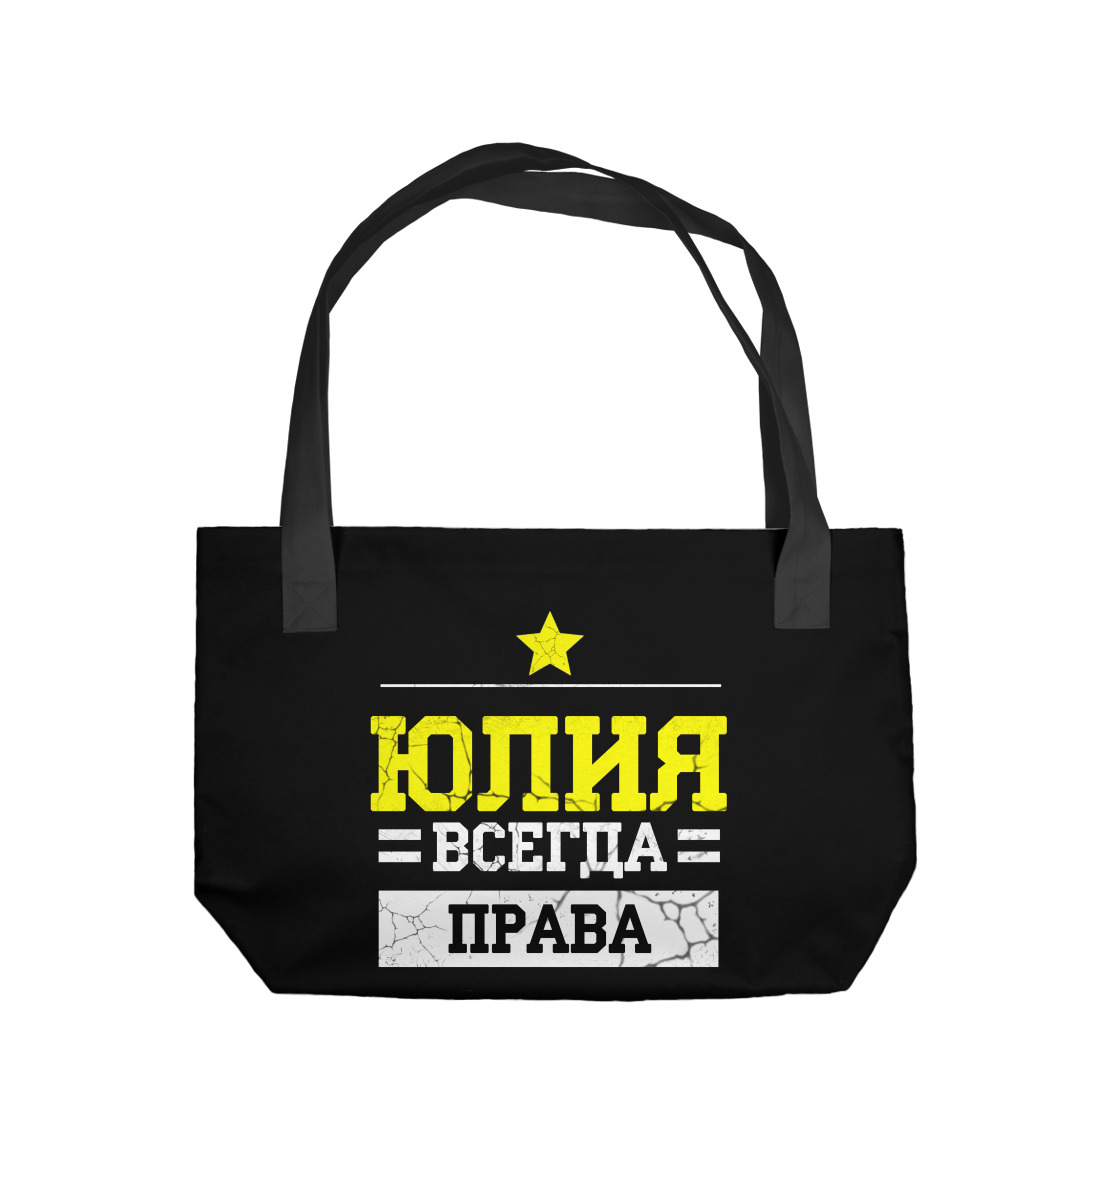 Купить Пляжная сумка Юлия, артикул YUL-412091-supmp